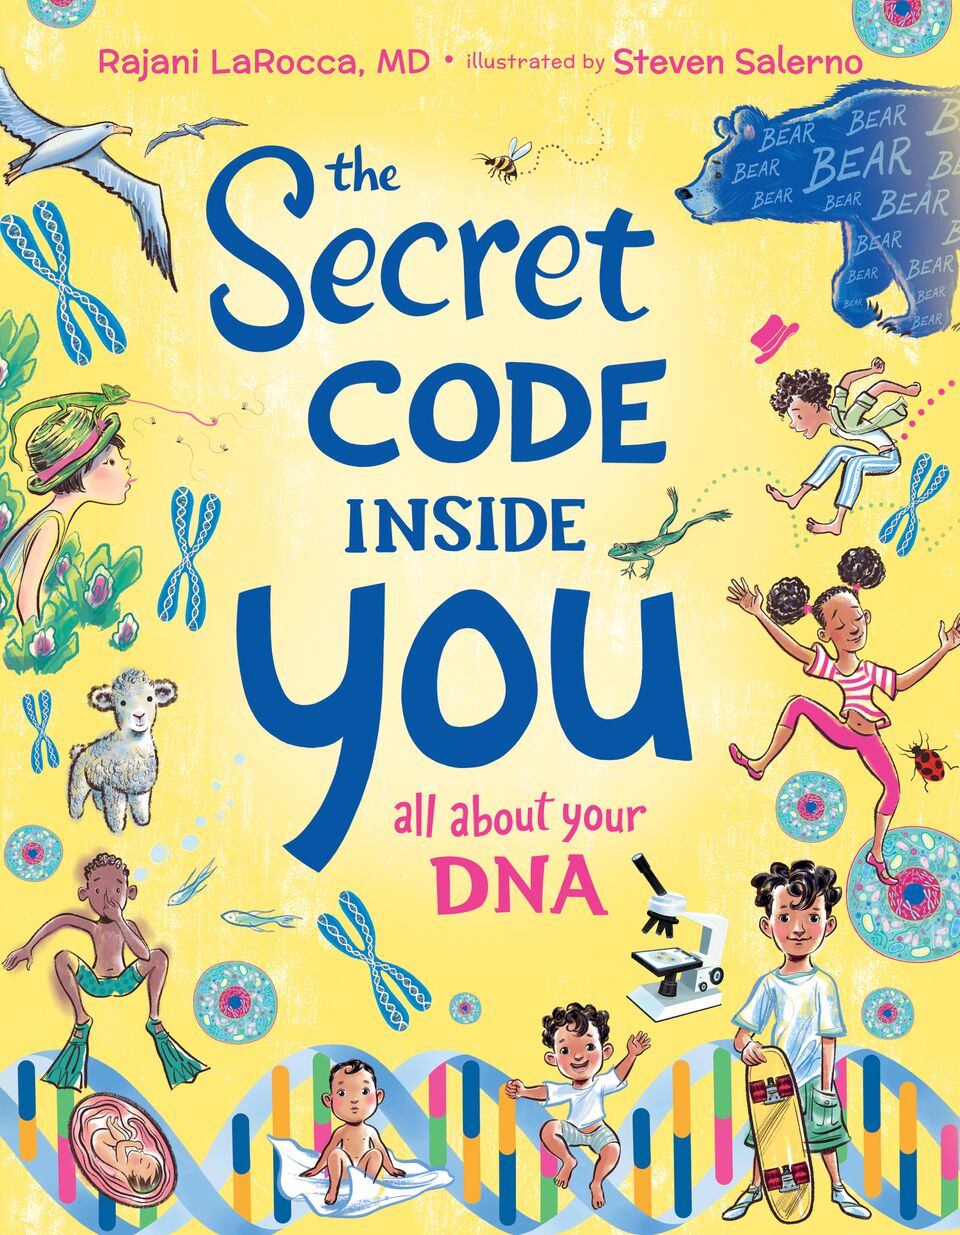 Rajani LaRocca's newest book, "The Secret Code Inside You"